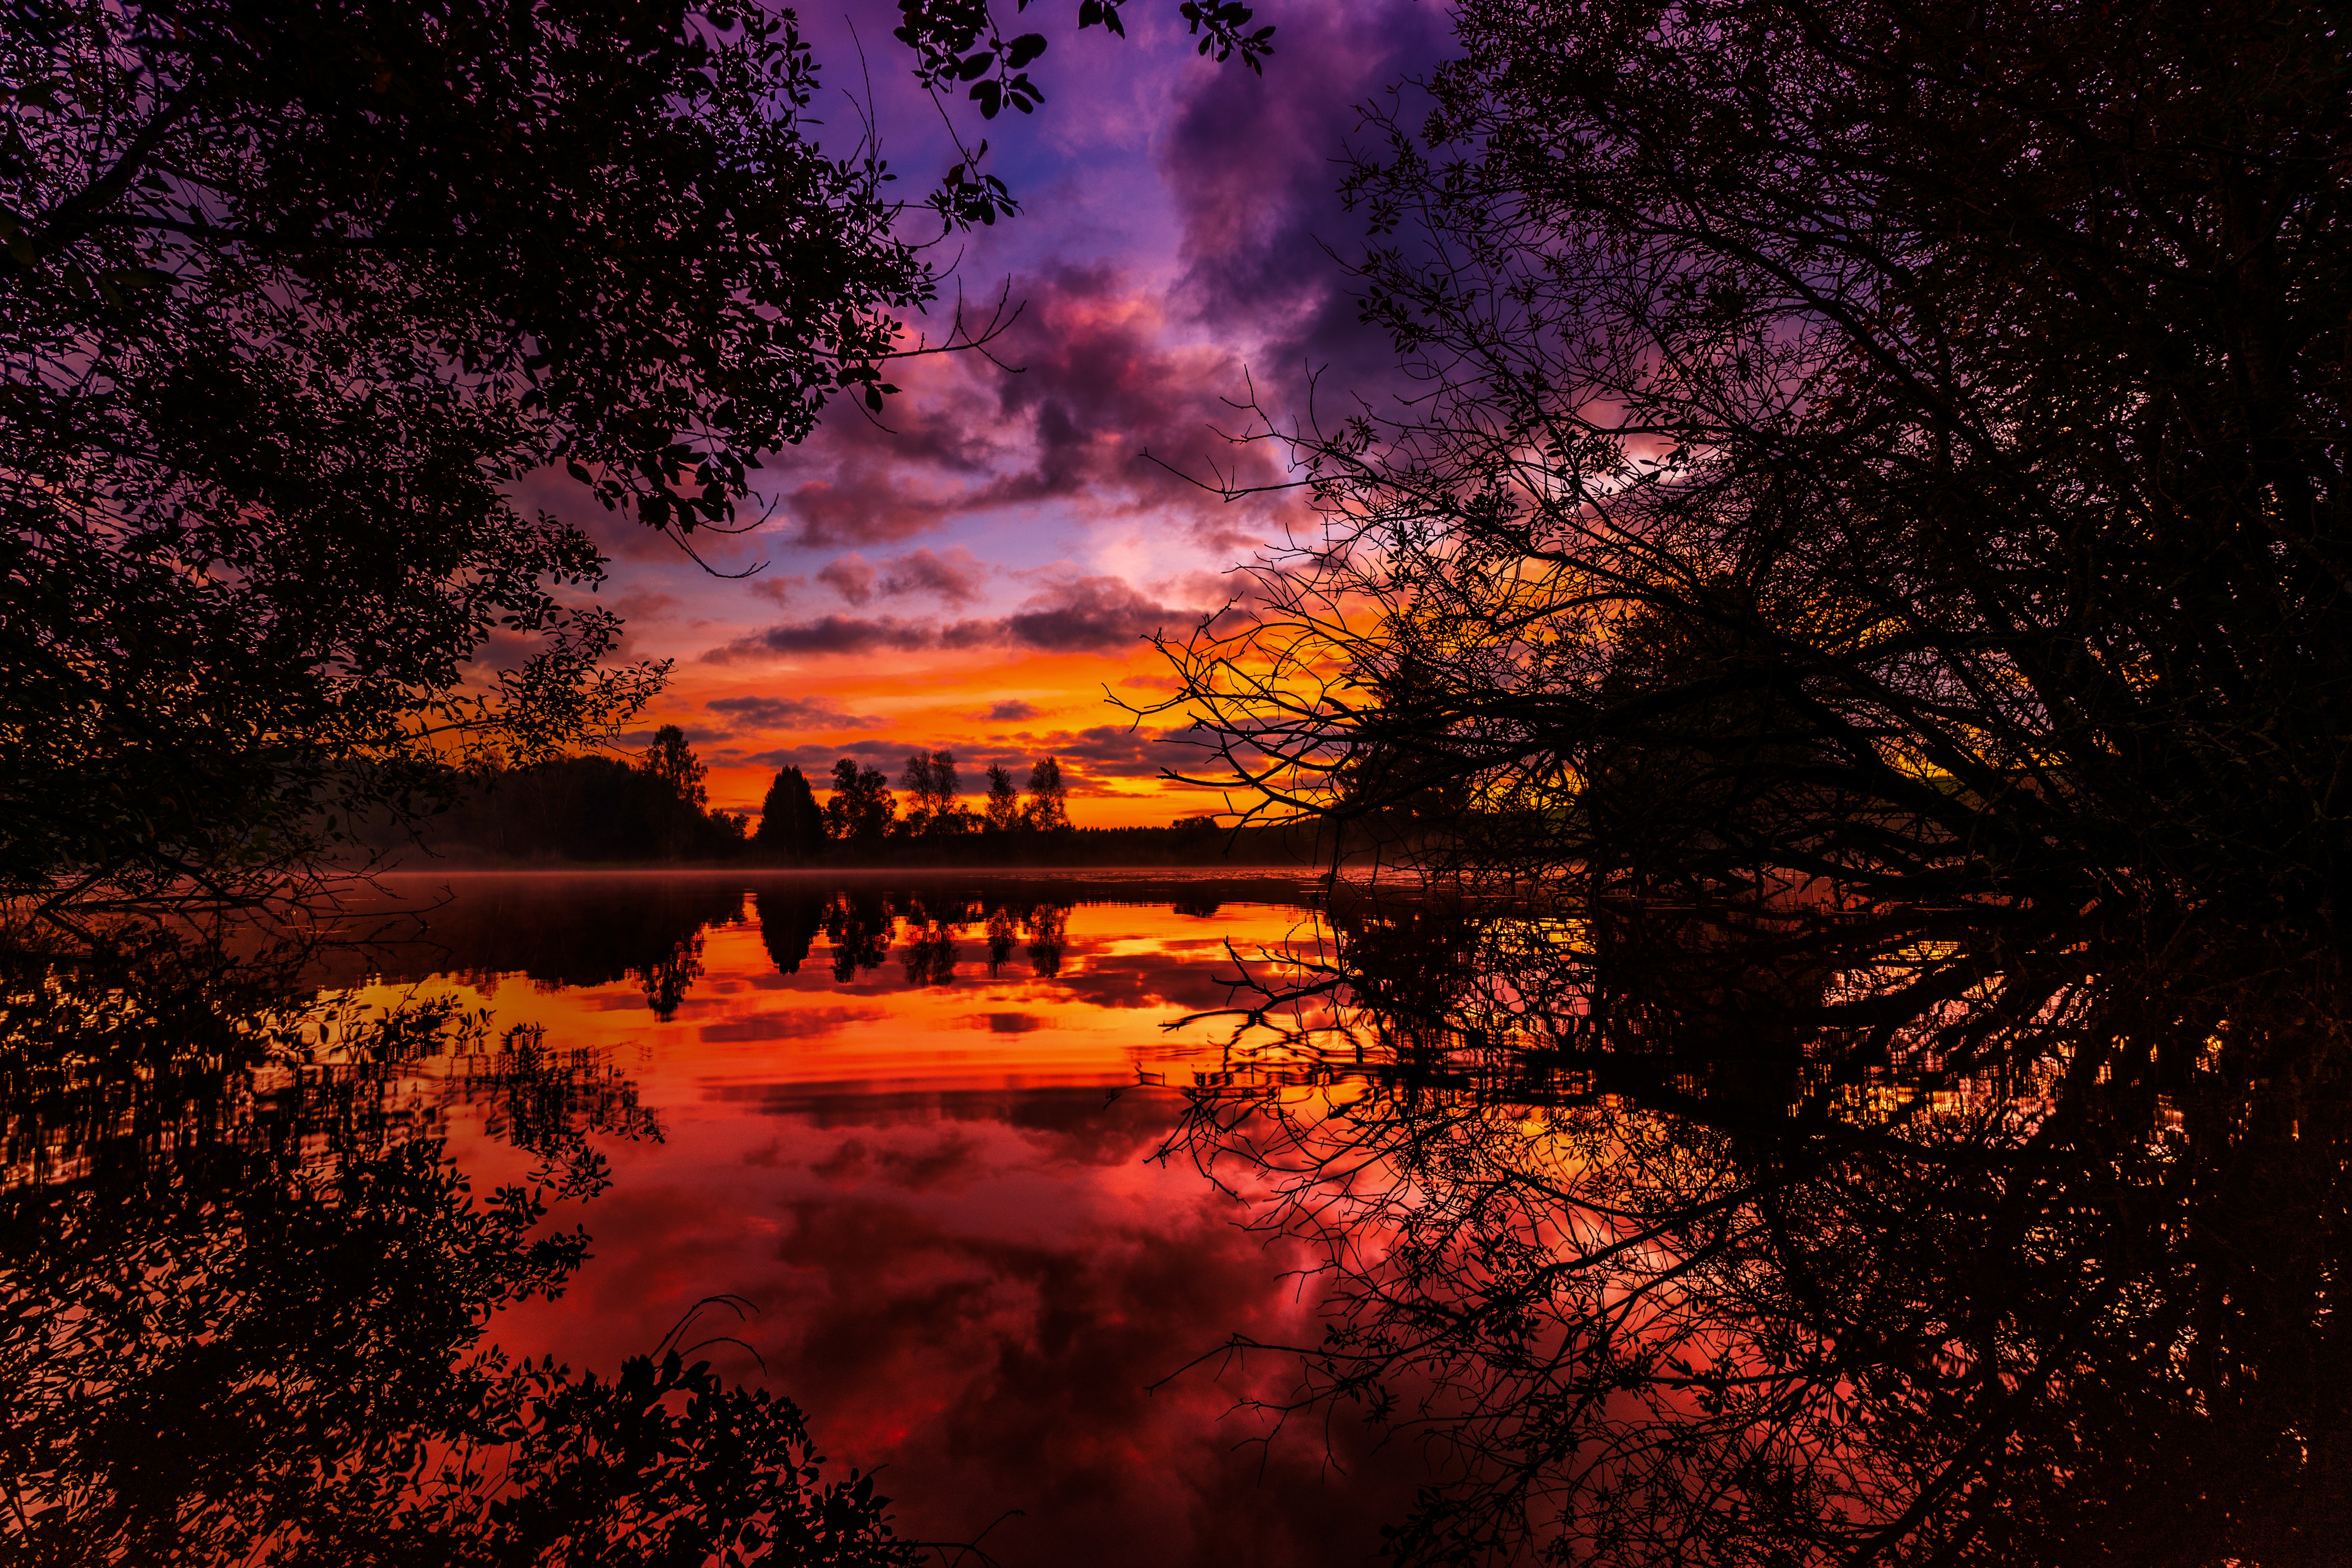 Sunrise Through the Trees by Bilder_meines_Lebens